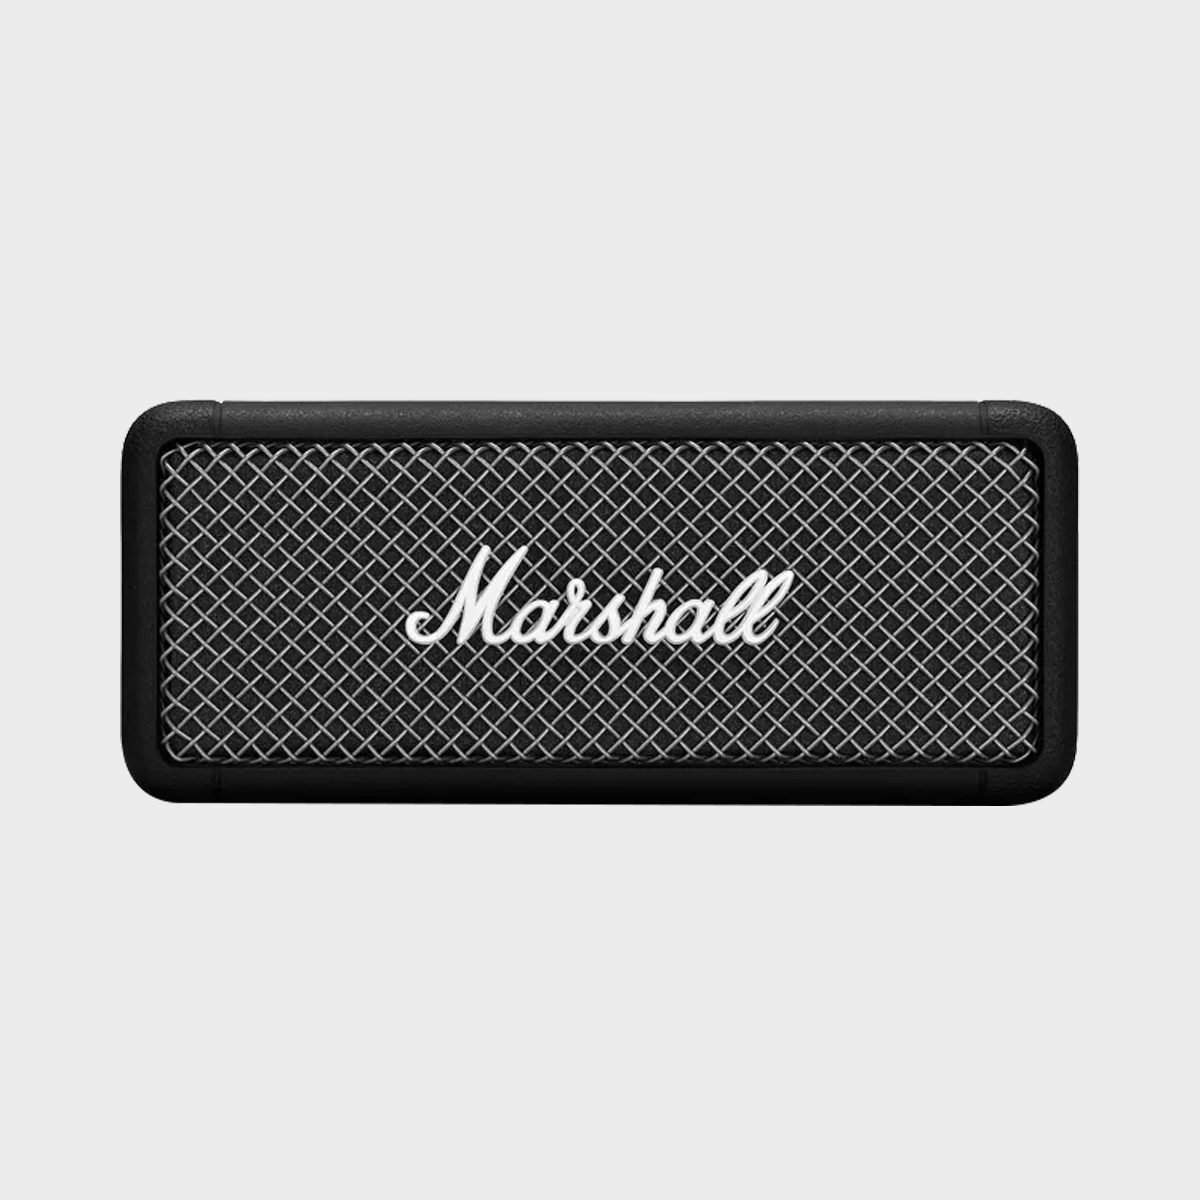 Marshall Emberton Bluetooth Portable Speaker Ecomm Target.com